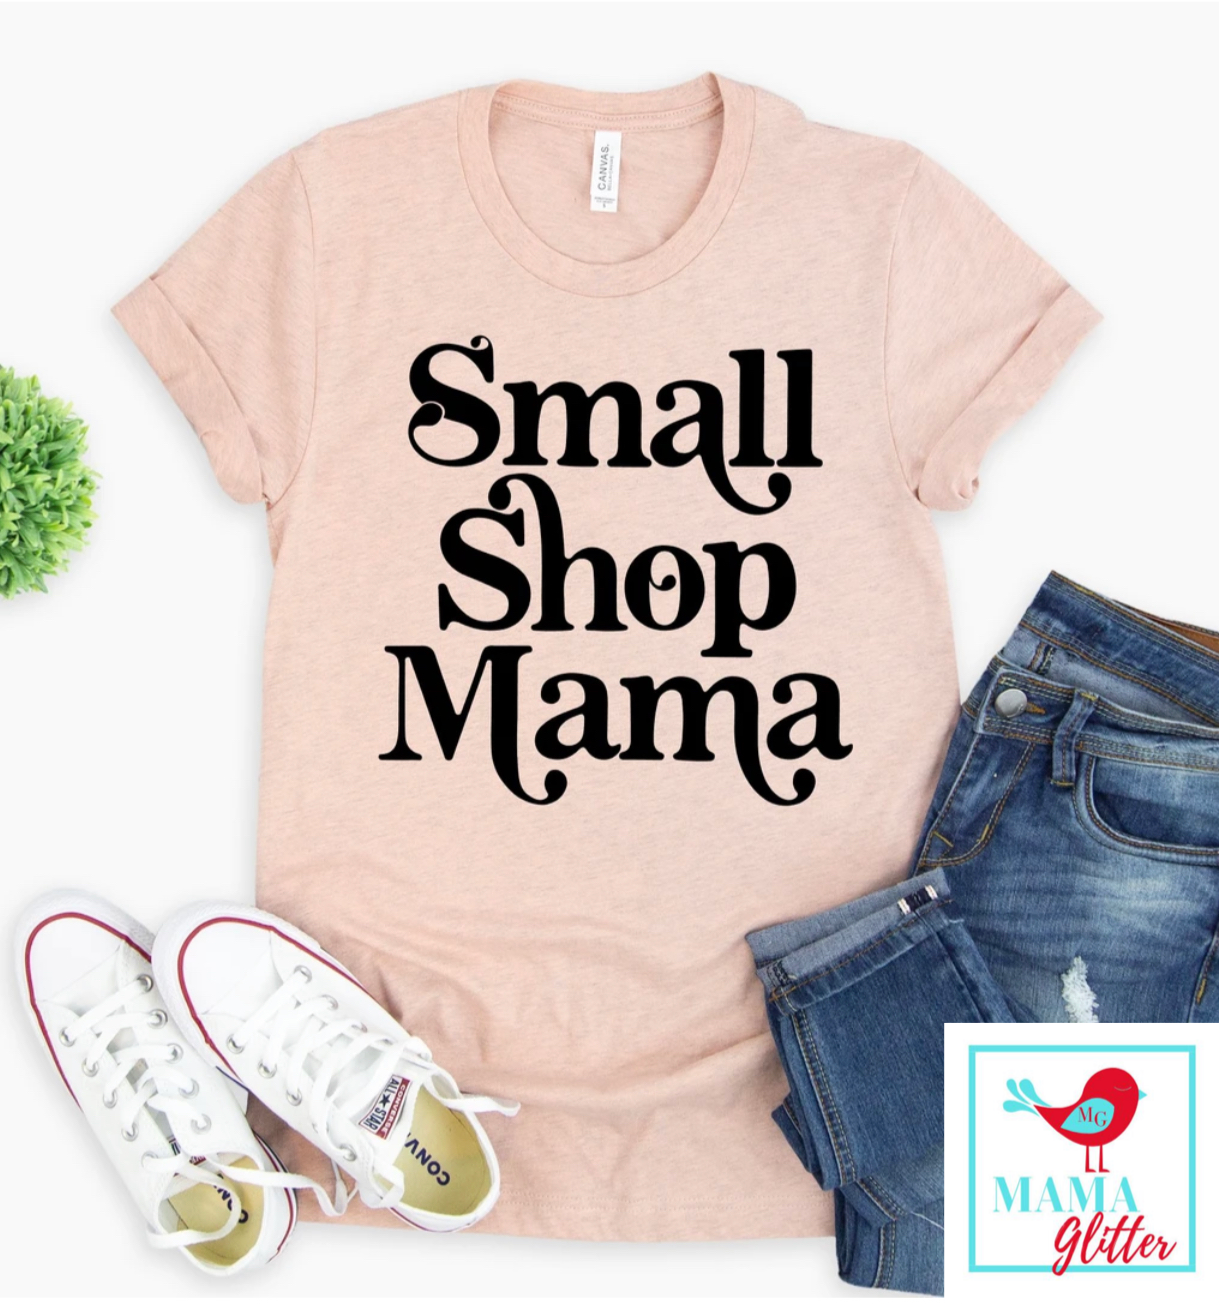 Shop Small Mama